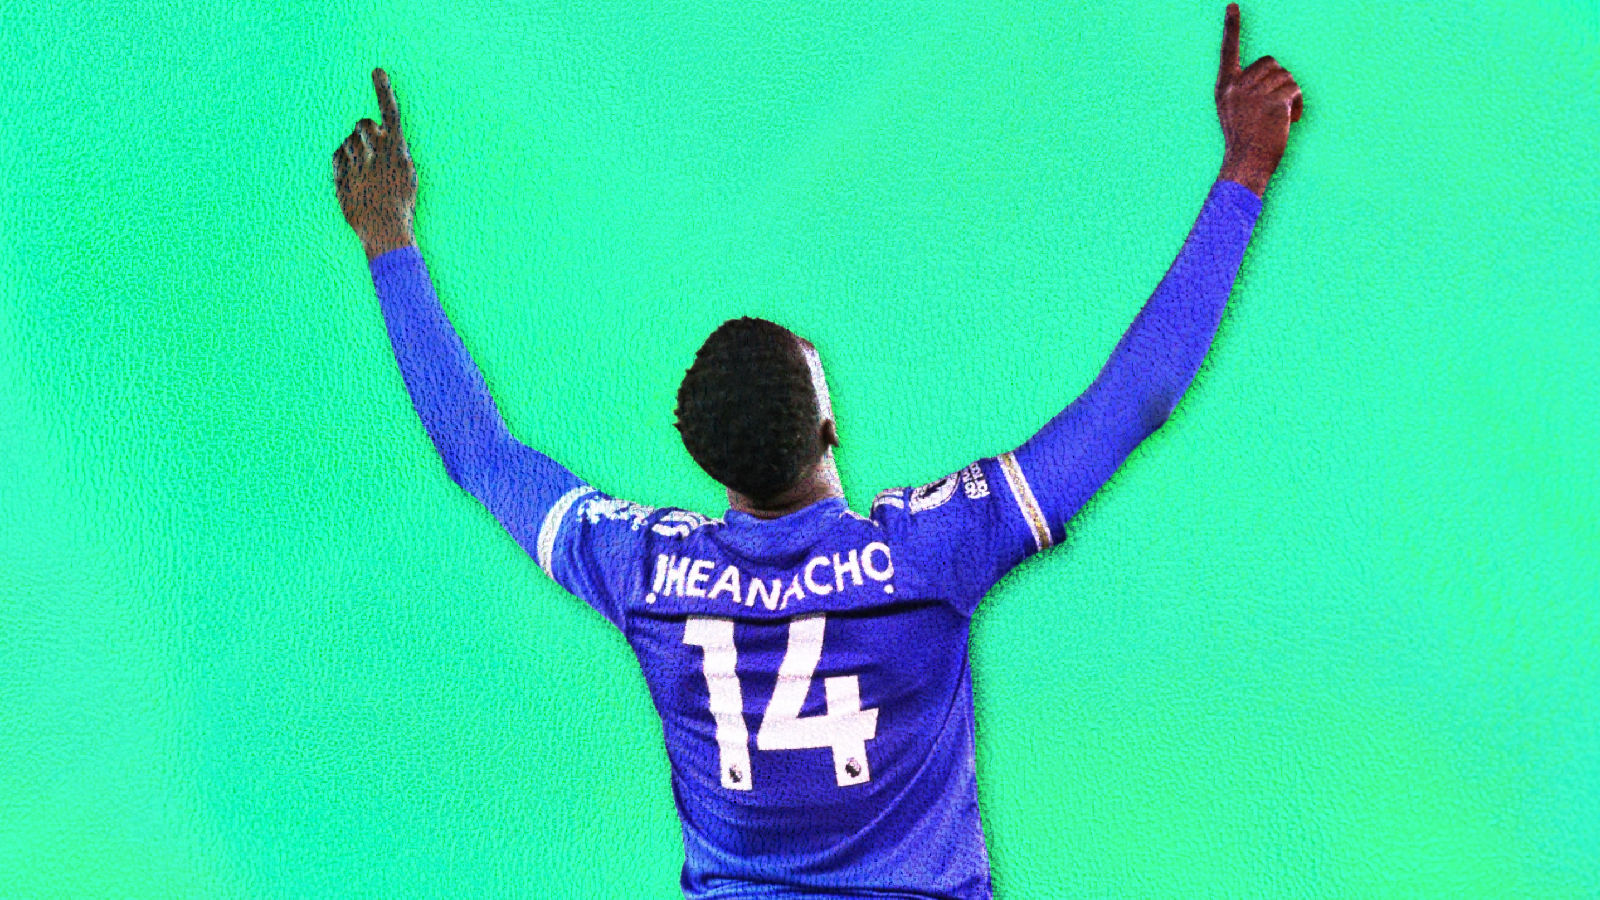 Kelechi Iheanacho celebrates after scoring a goal against Crystal Palace